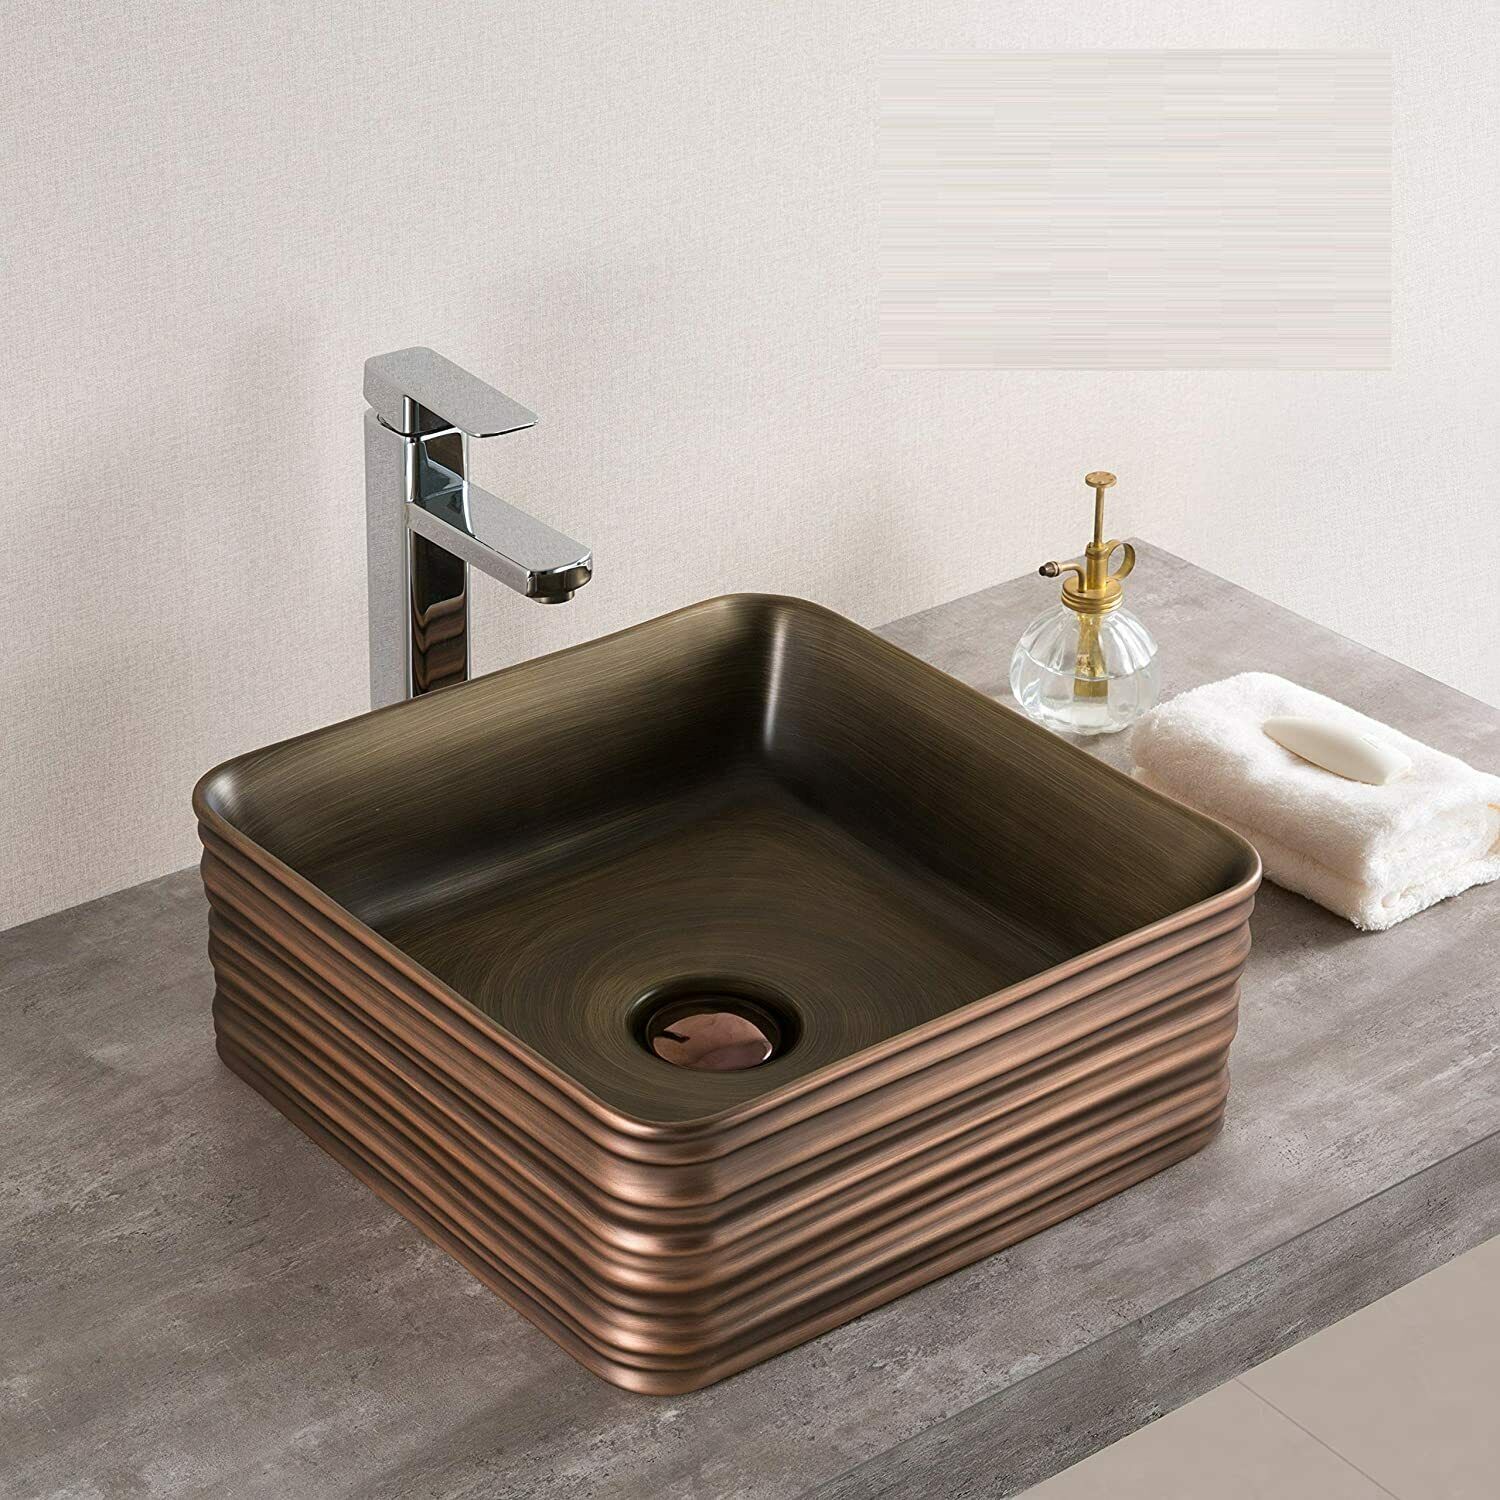 InArt Square Bathroom Ceramic Vessel Sink Art Basin in Antique Bronze Color